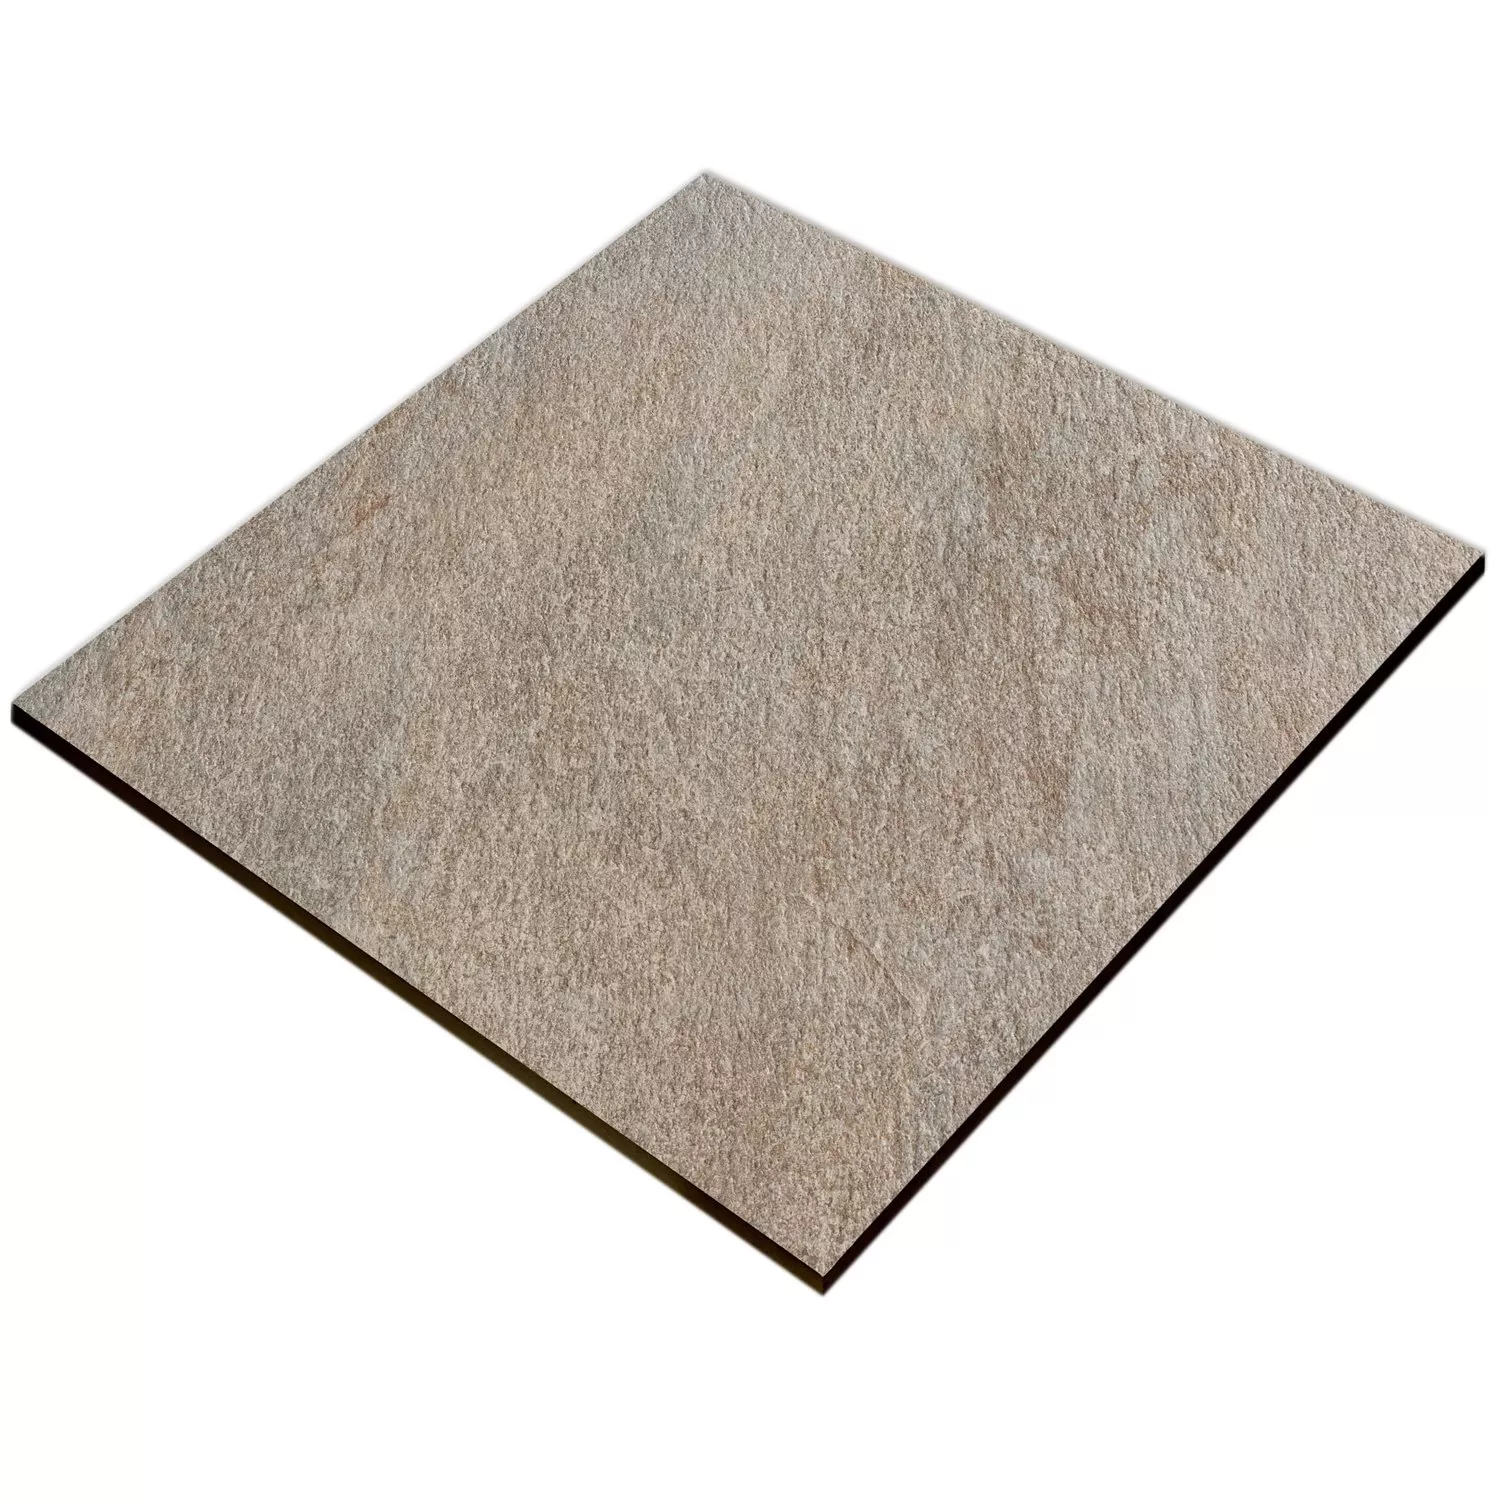 Sample Floor Tiles Stoneway Natural Stone Optic Grey